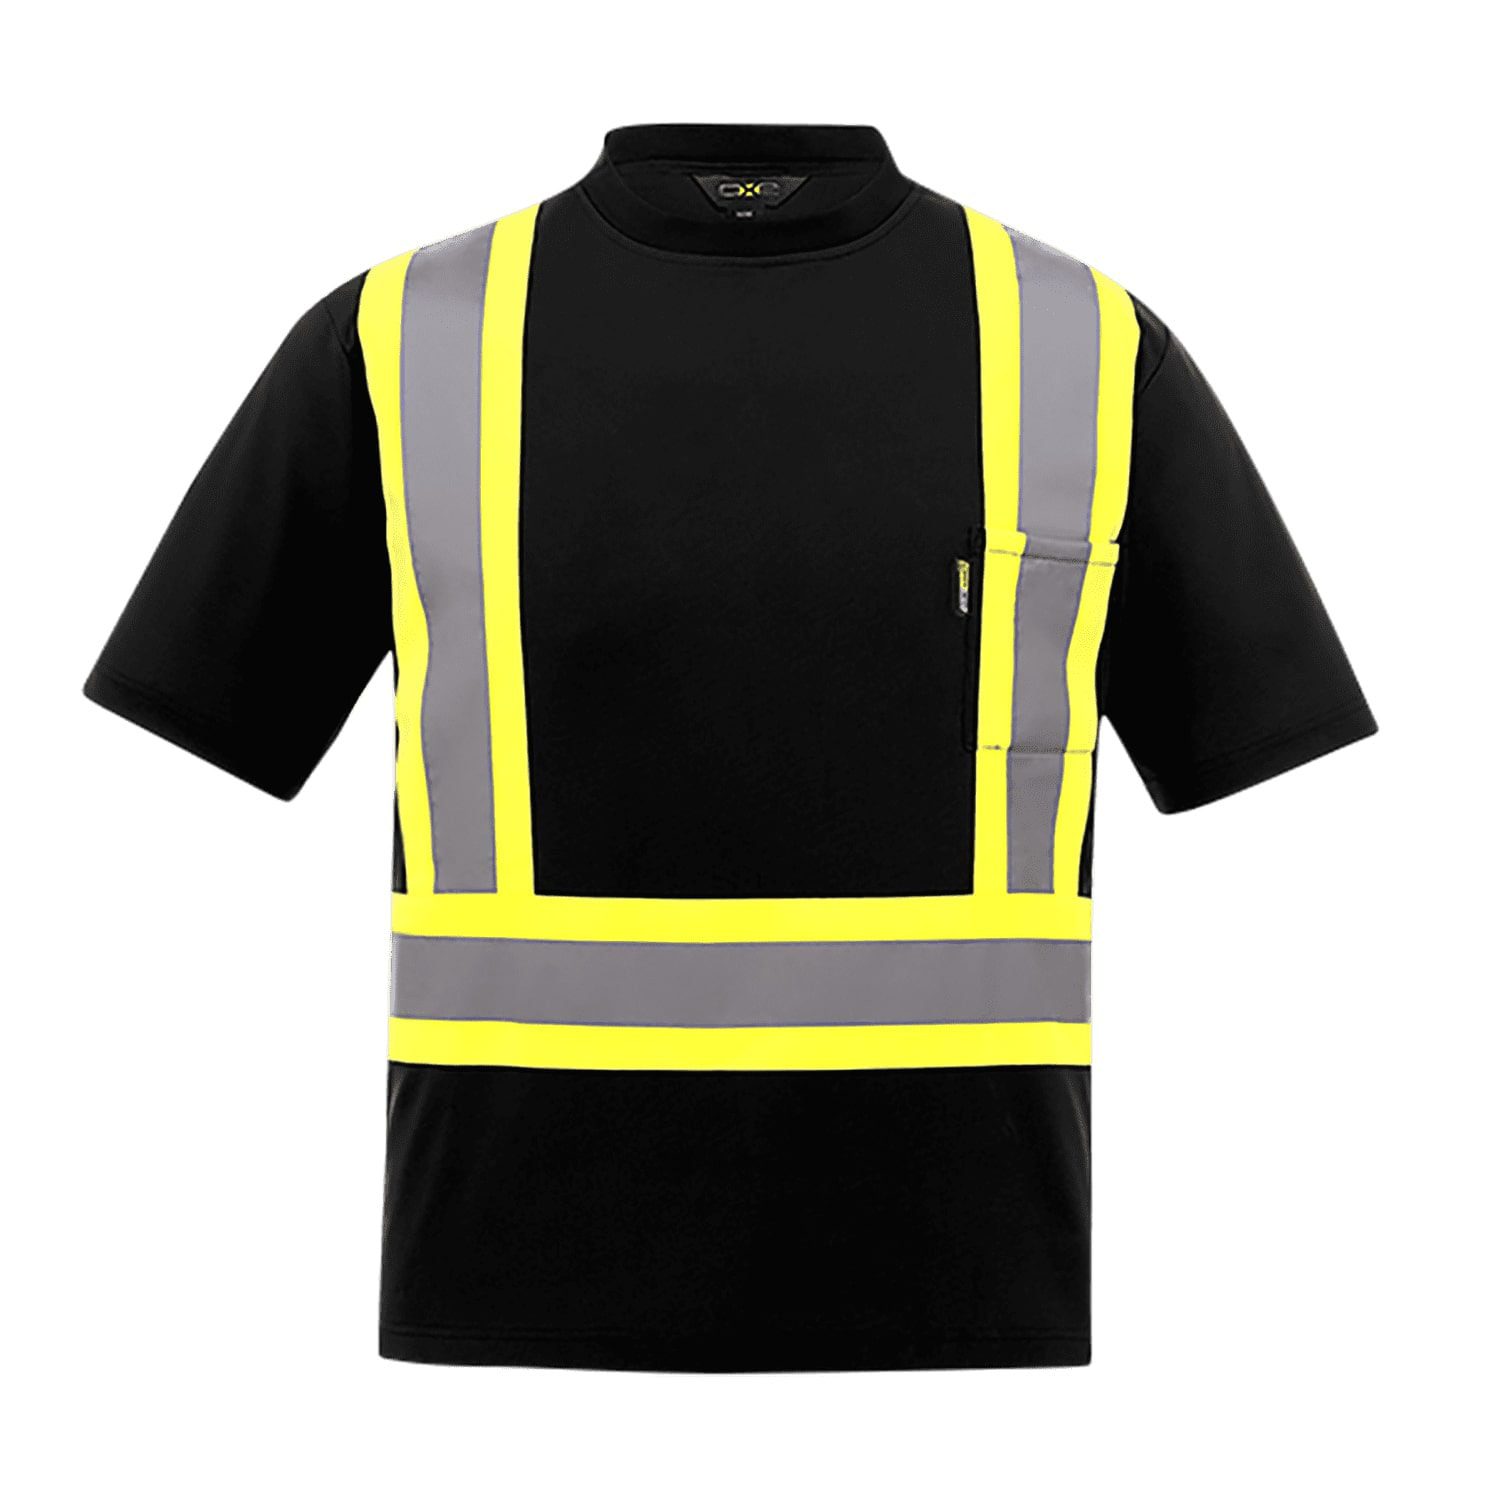 Canada Sportswear HI-VIS SAFETY T-SHIRT #S05960 Black